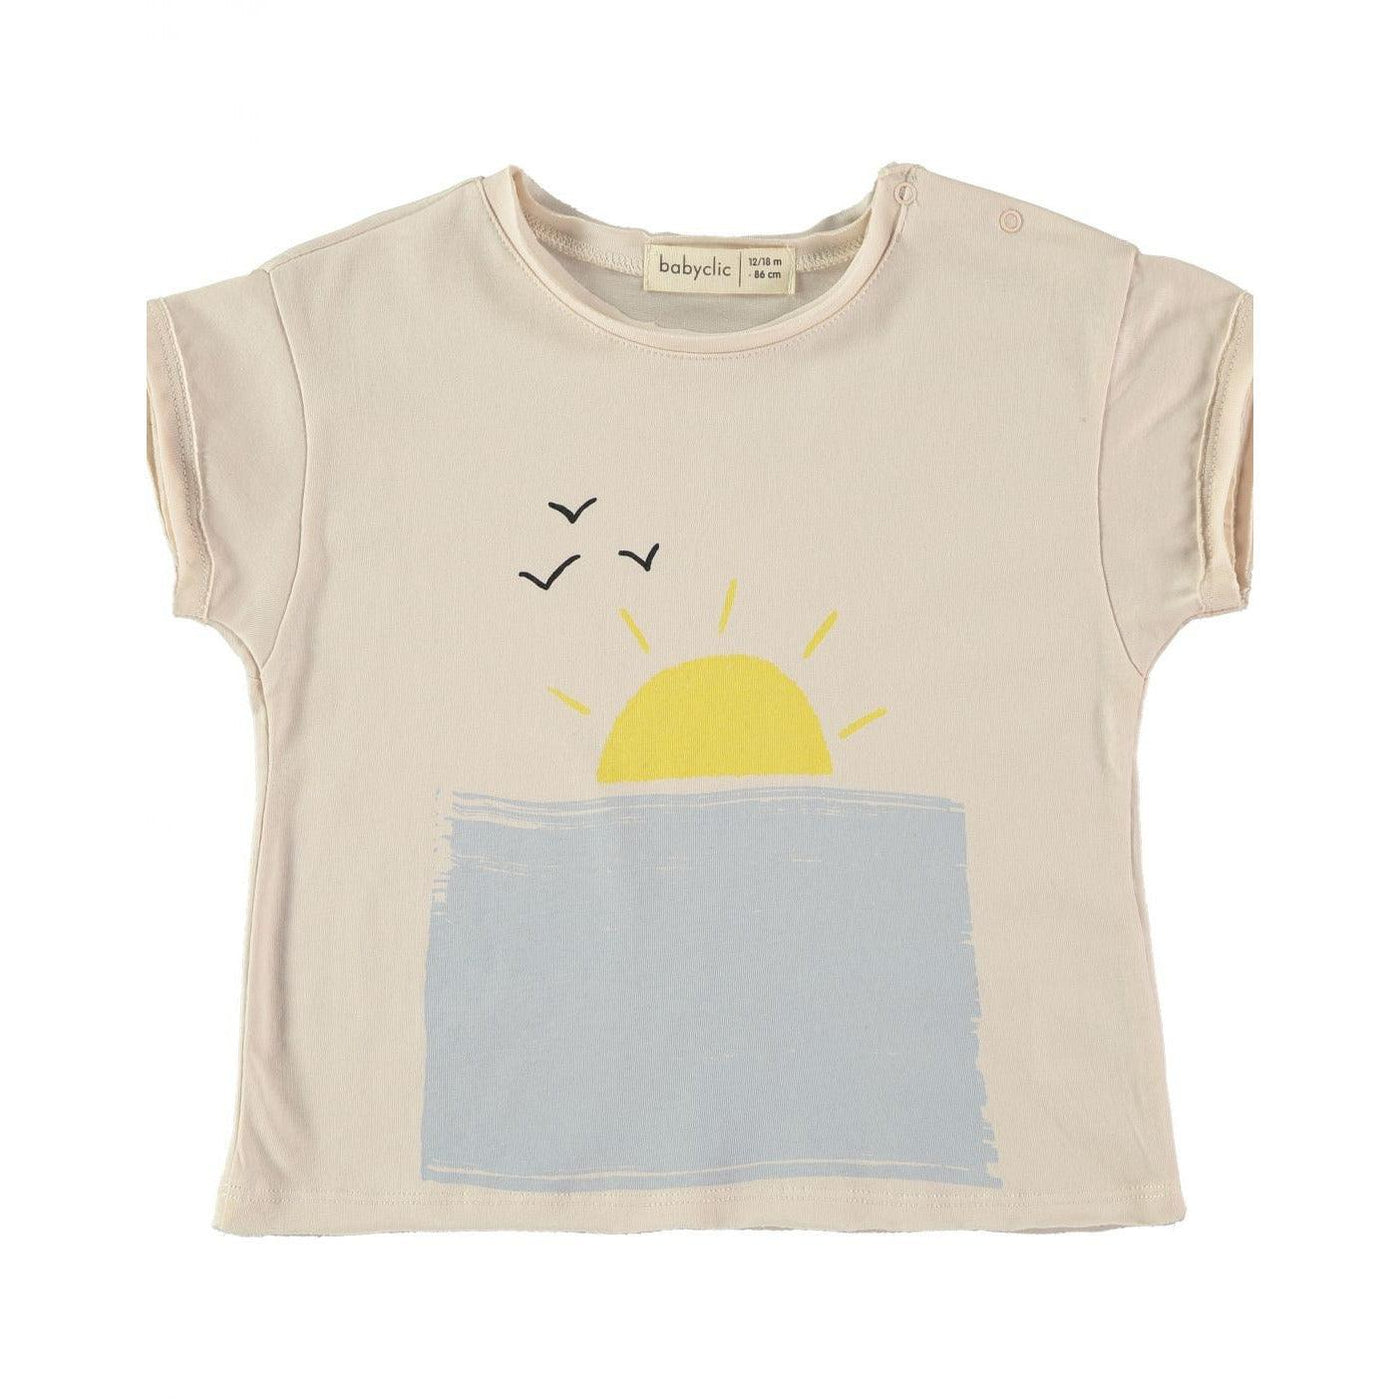 BABYCLIC - Shirt Sunset - Le CirQue Kidsconceptstore 